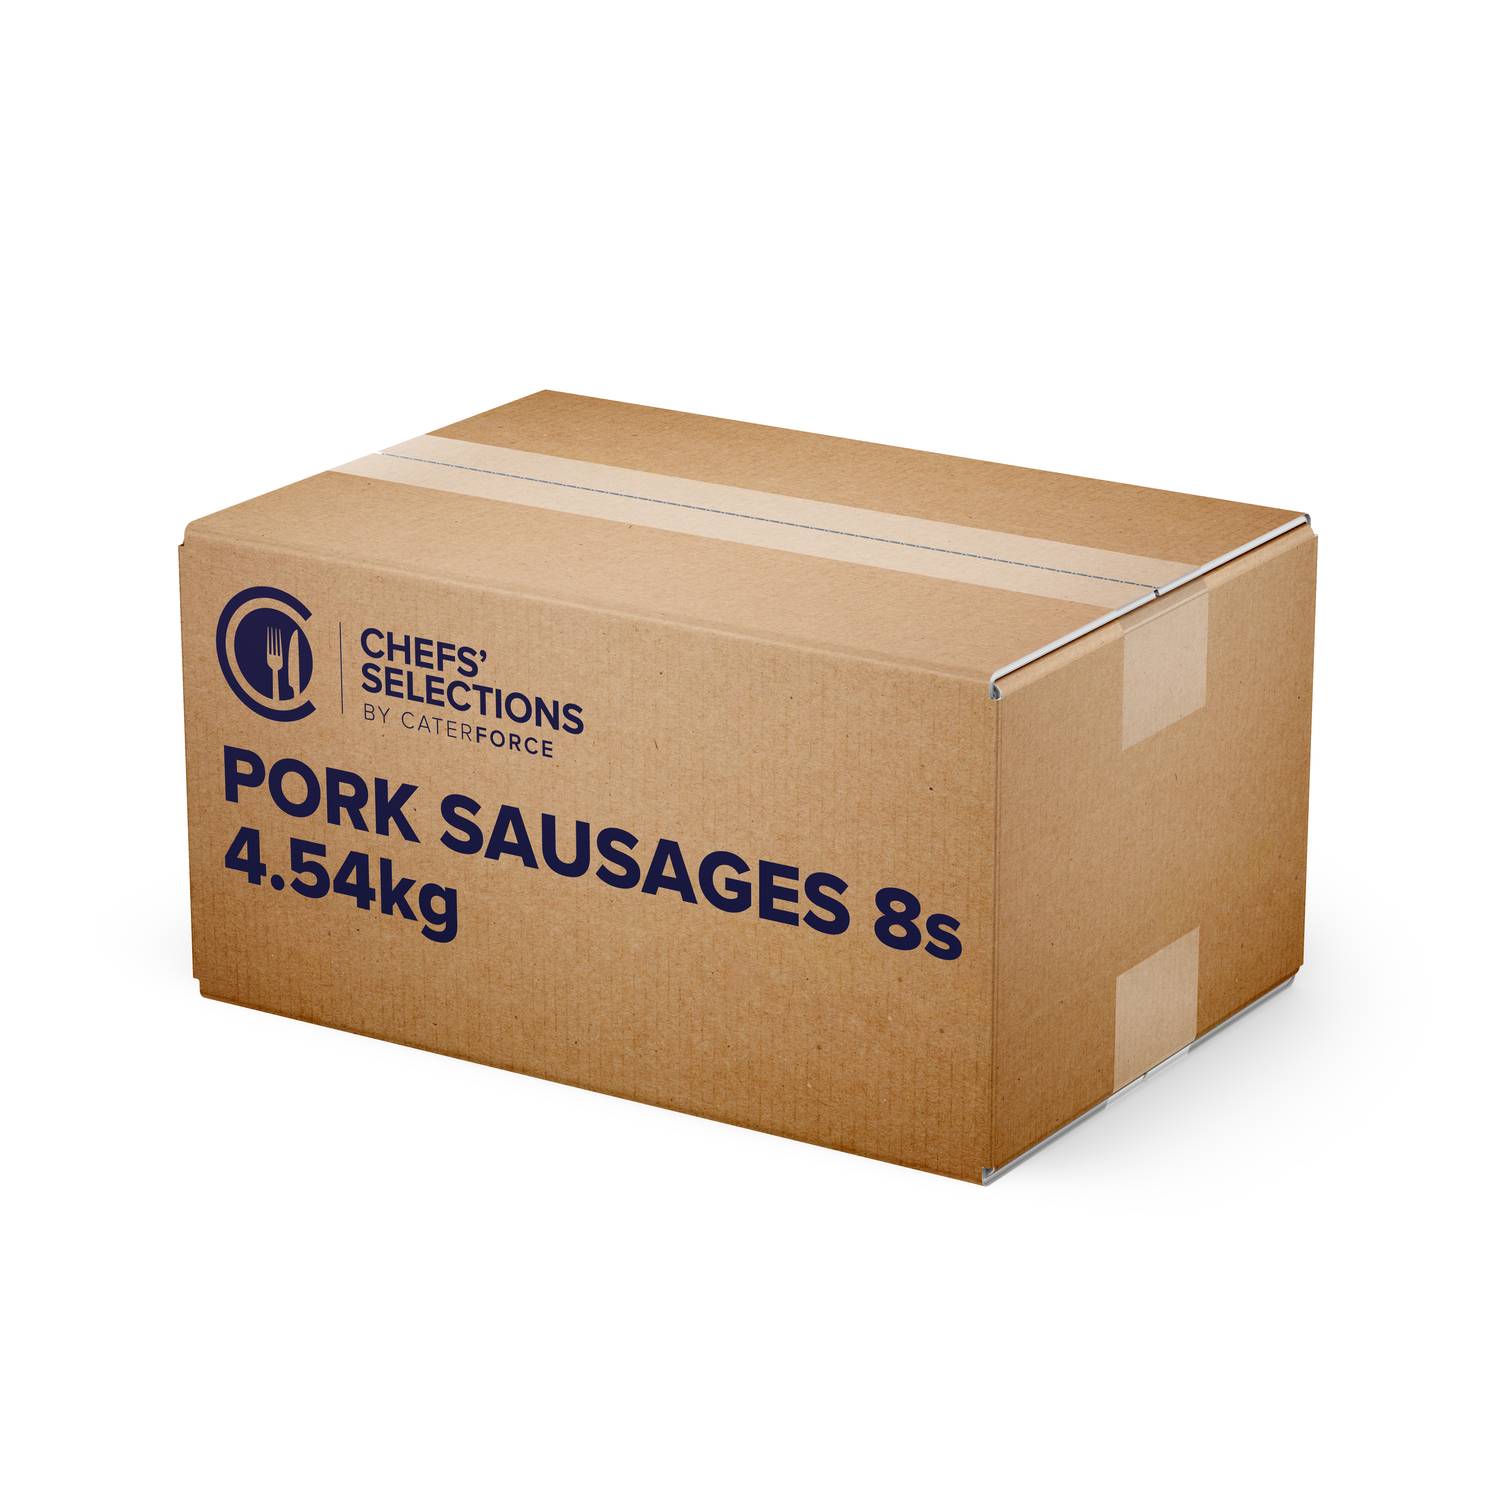 Chefs’ Selections Pork Sausages 8’s (1 x 4.54kg)